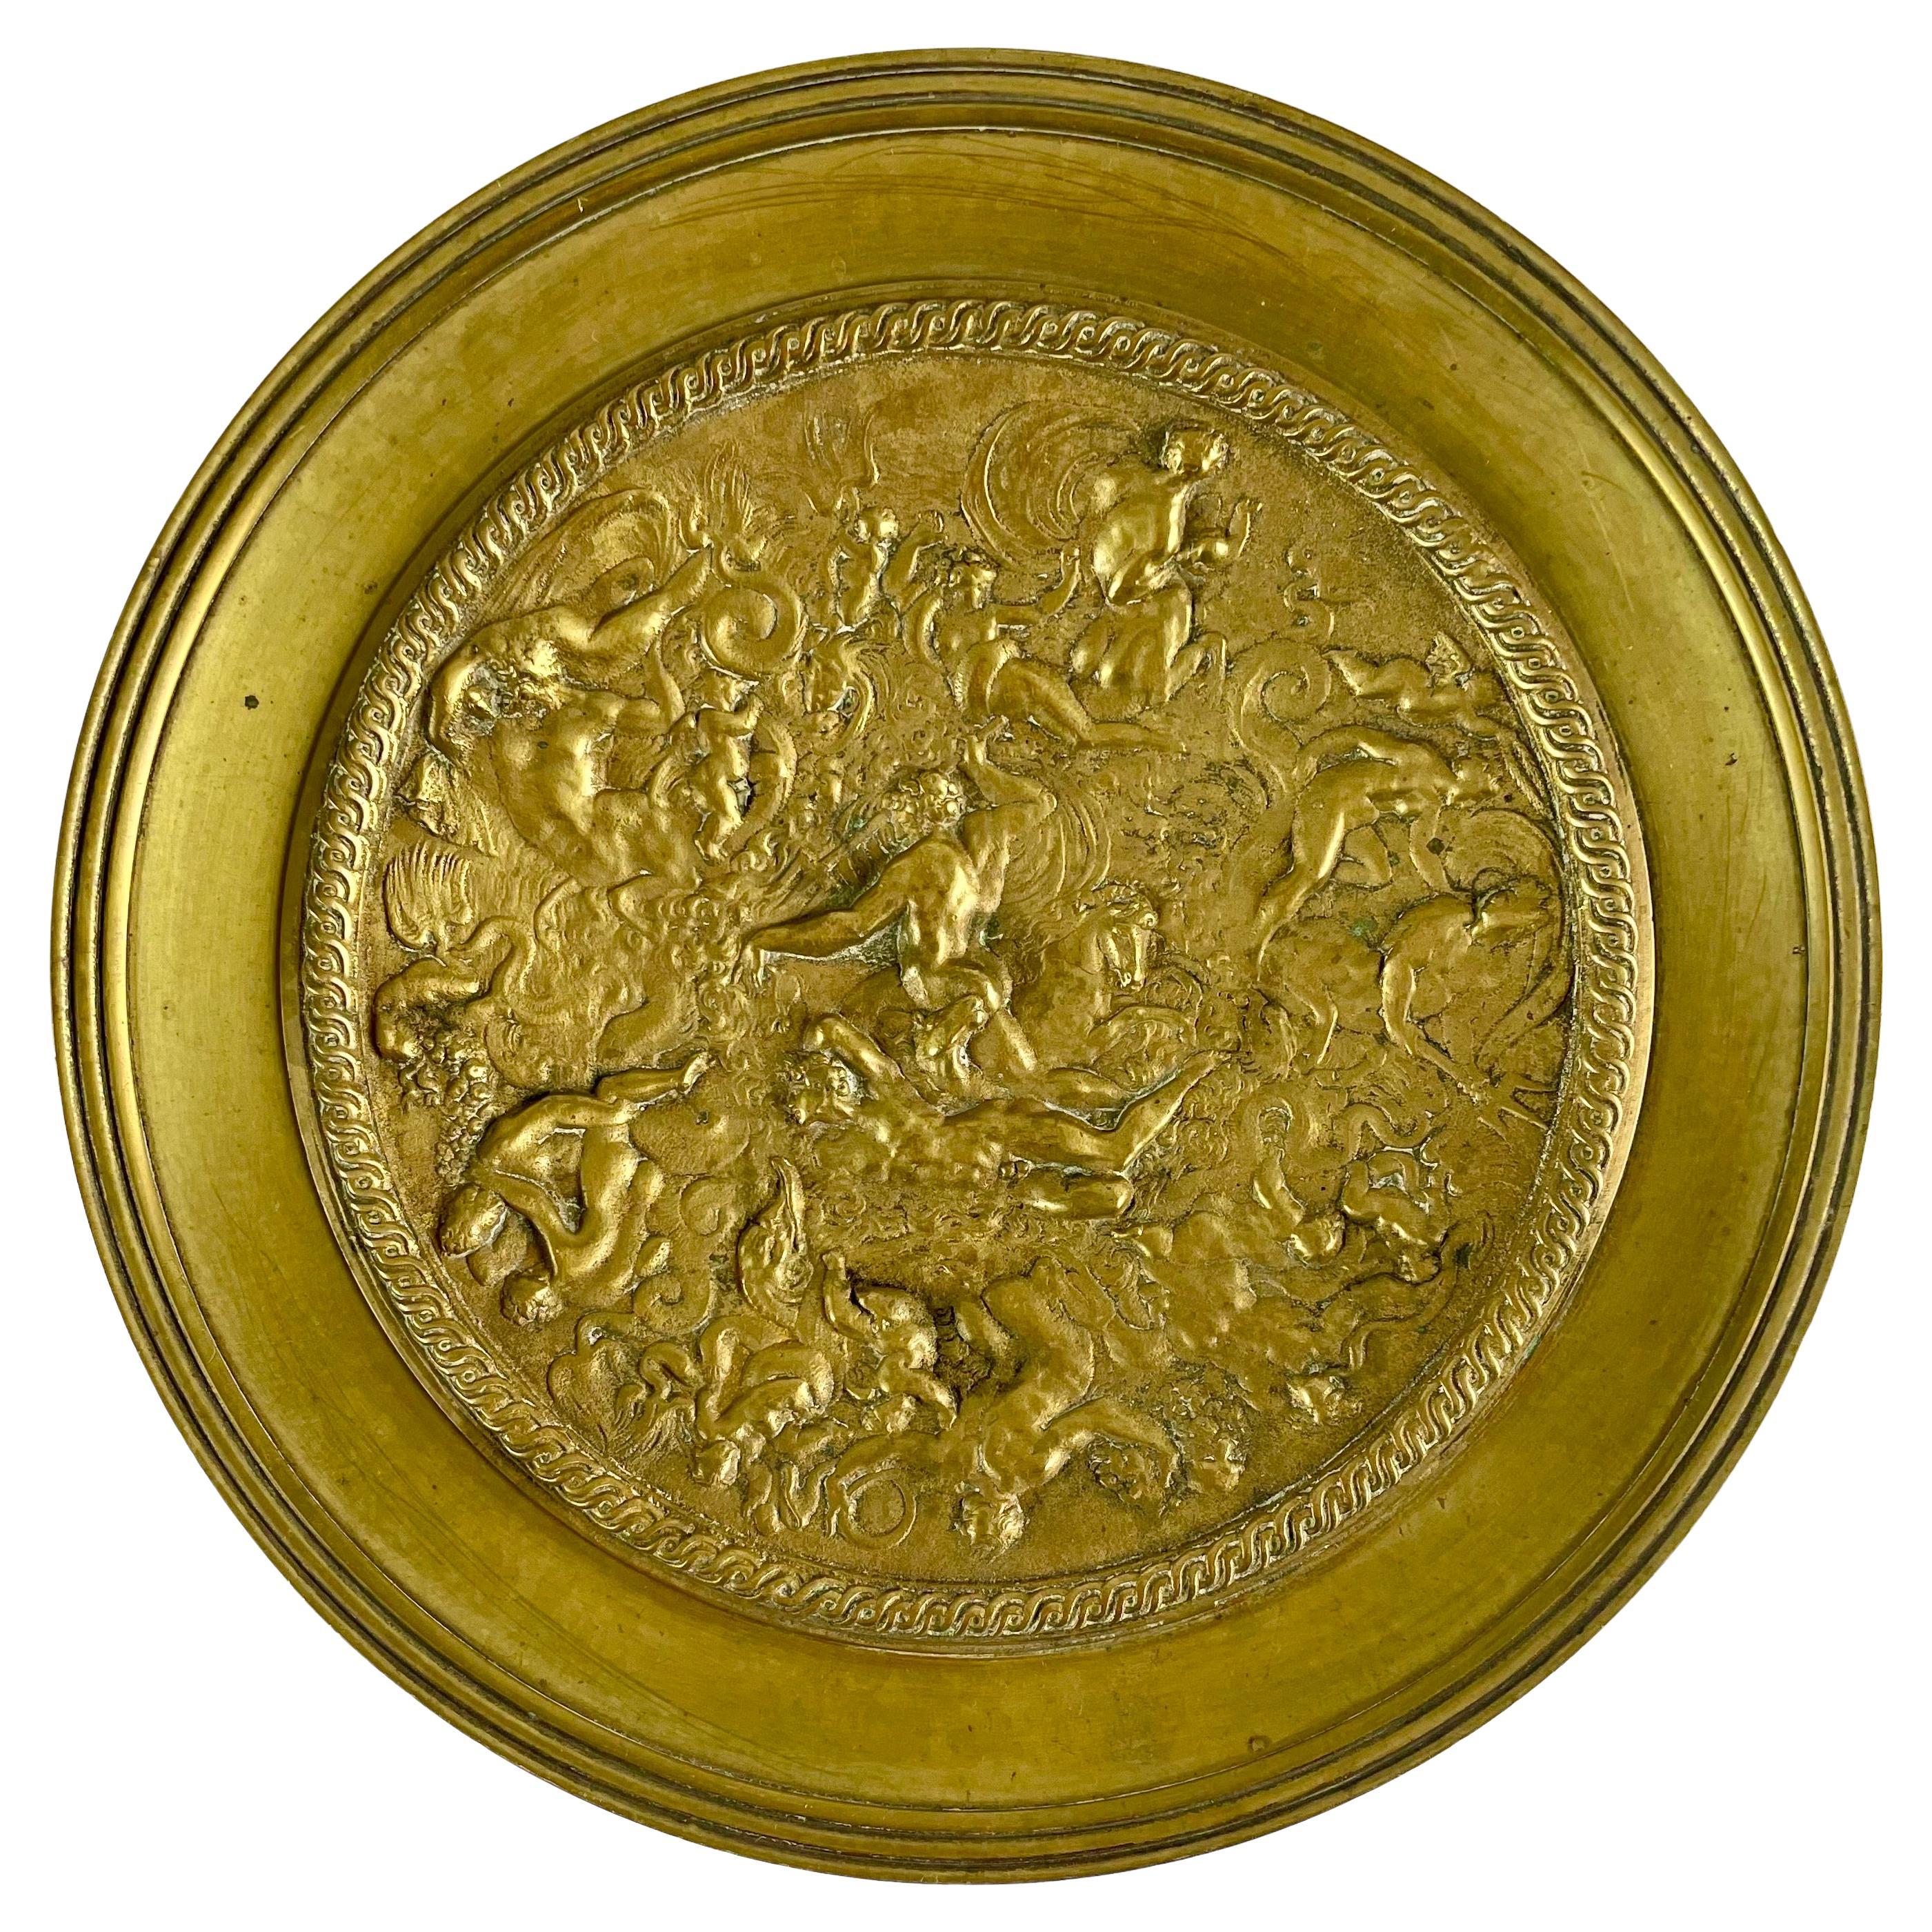 Tazza Neo Renaissance Pair of Cups Gilt Bronze Decor Deities of Antiquity 19thC. For Sale 3